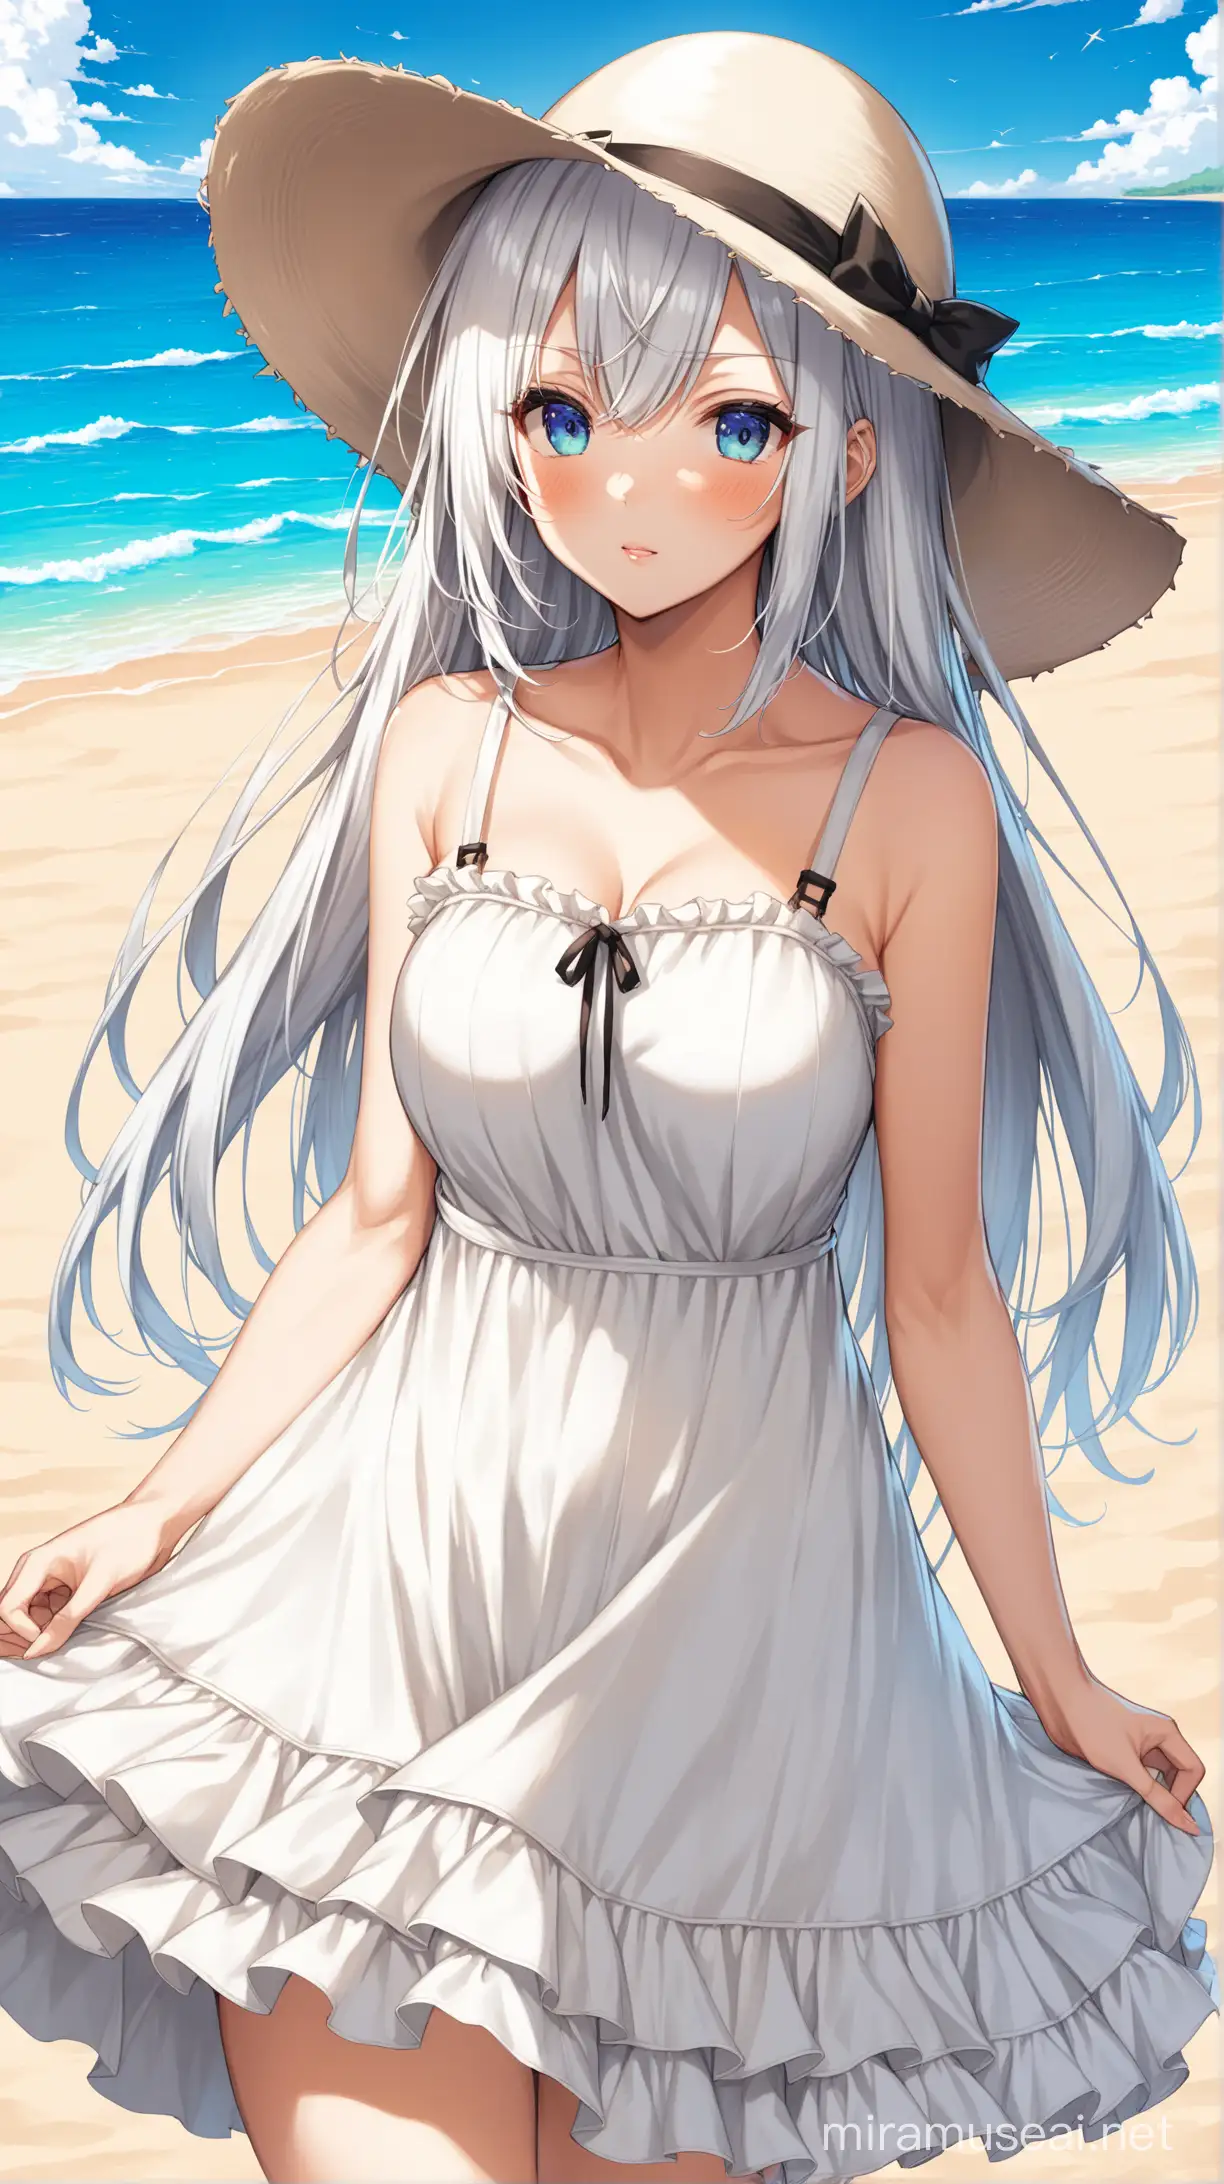 Elegant Kei Shirogane Inspired Character in White Sundress and Beach Hat